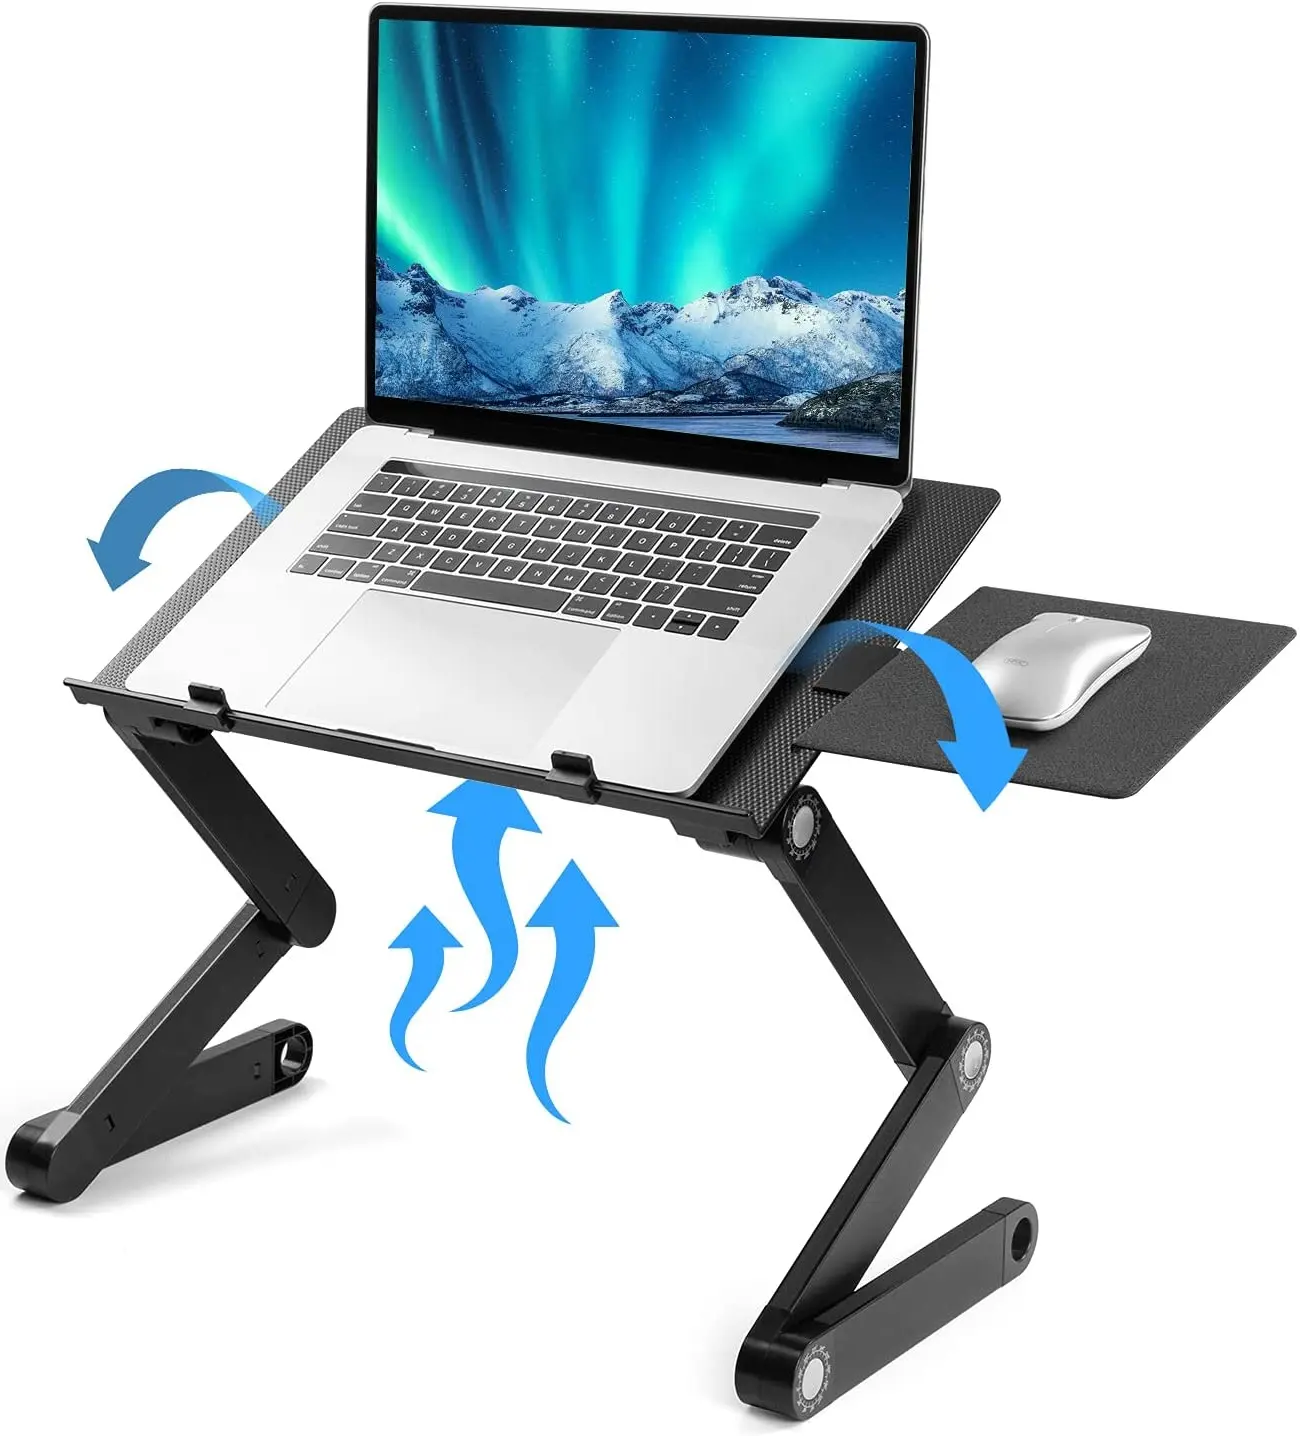 Adjustable portable aluminum alloy laptop stand foldable metal laptop table holder notebook desk support for bed